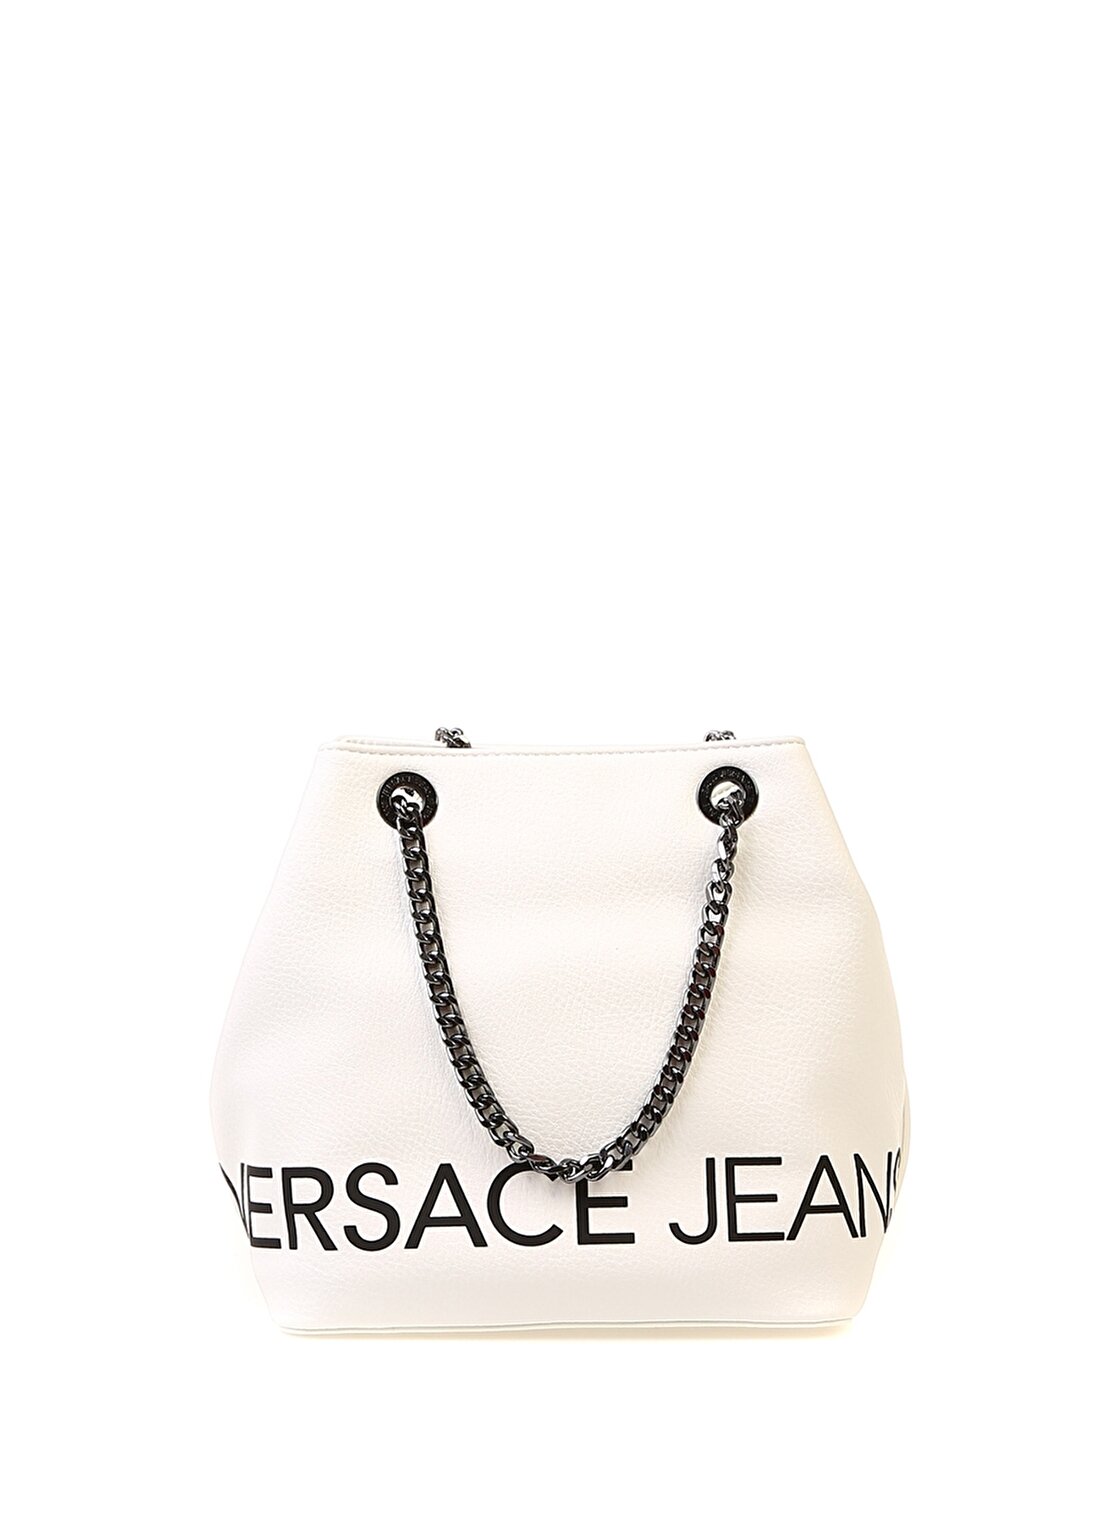 Versace Jeans Beyaz El Çantası